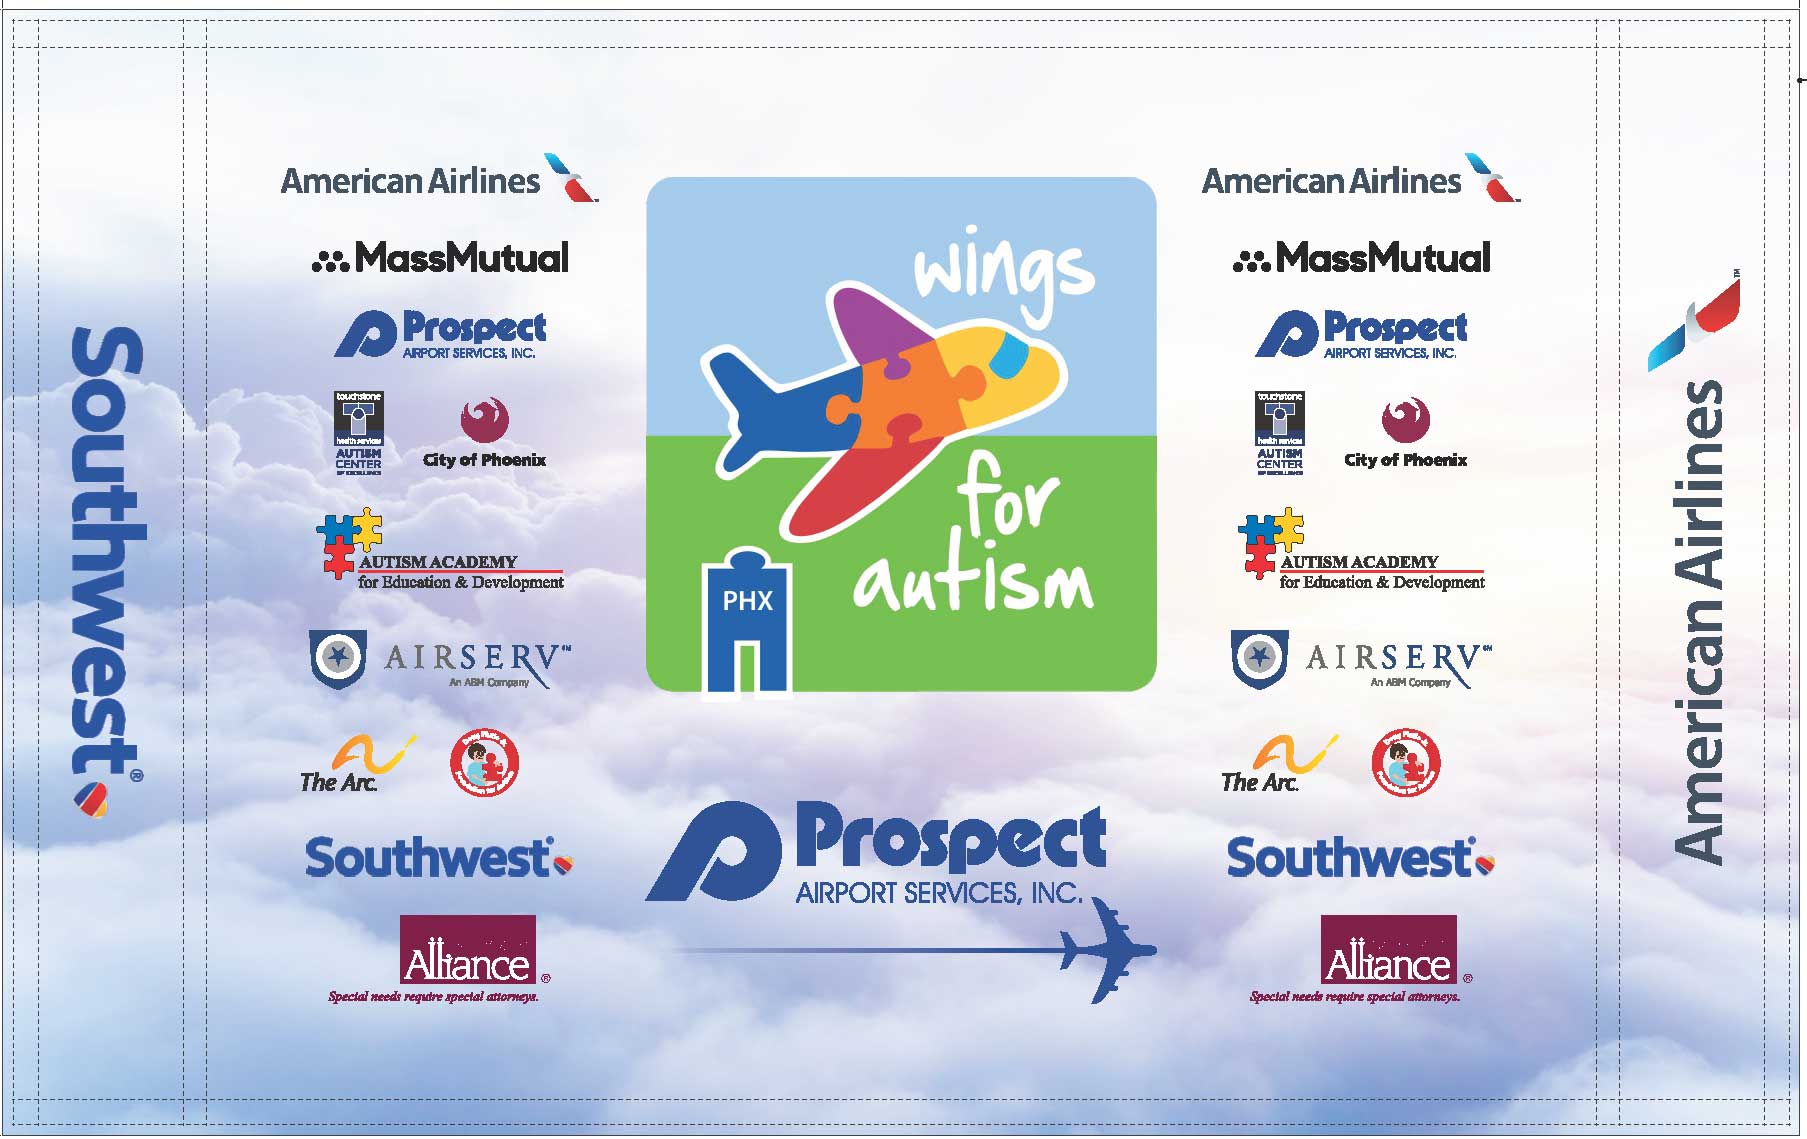 Prospect Sponsors “Wings For Autism®” At Phoenix Sky Harbor International Airport